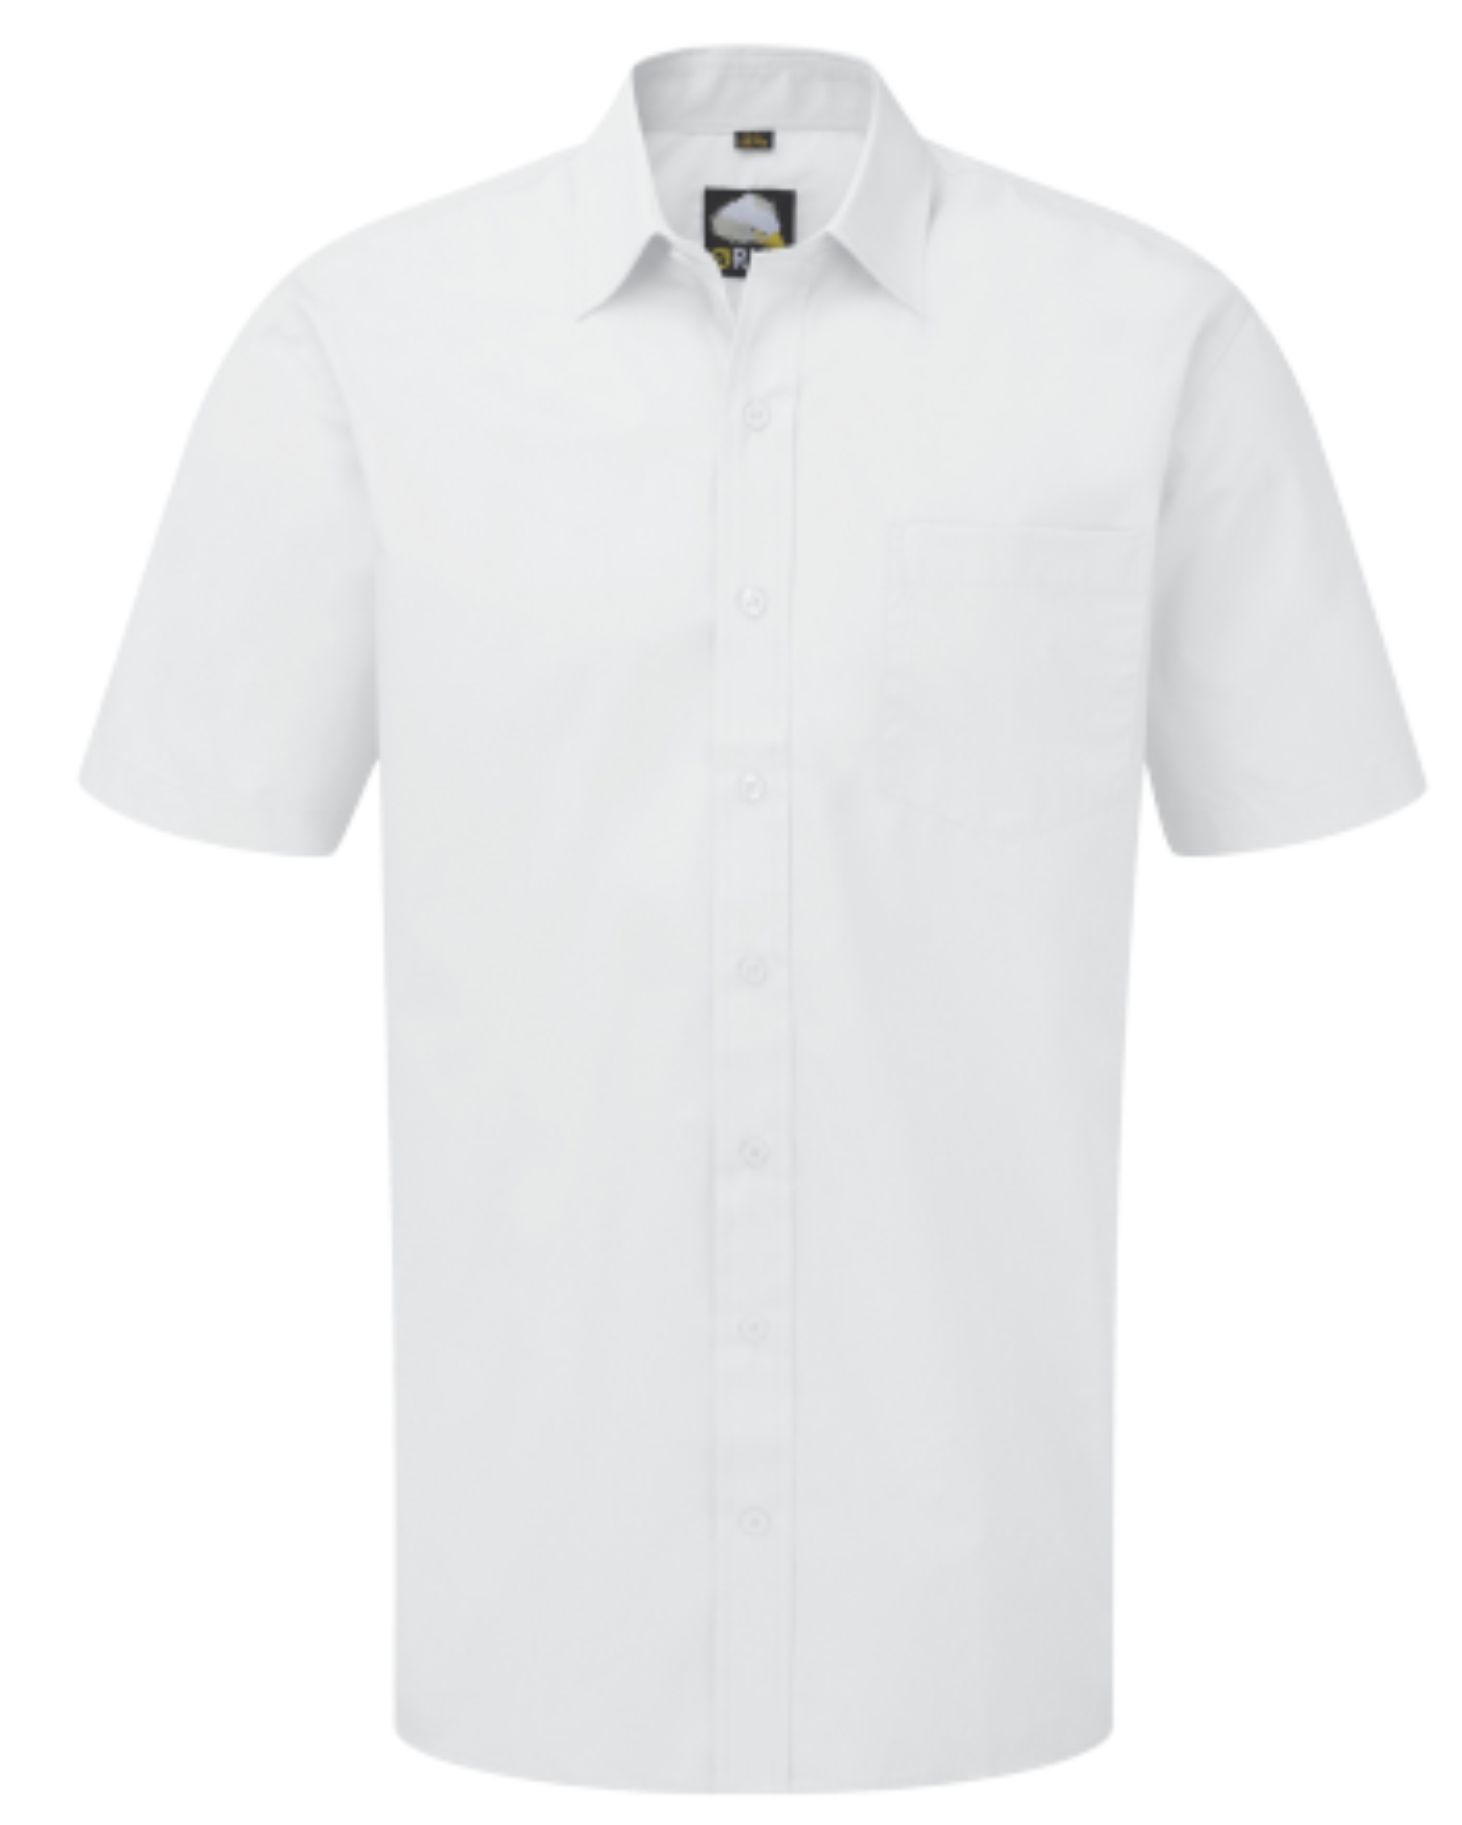 Orn 5300 Manchester Short Sleeve Premium Shirt - Click Image to Close